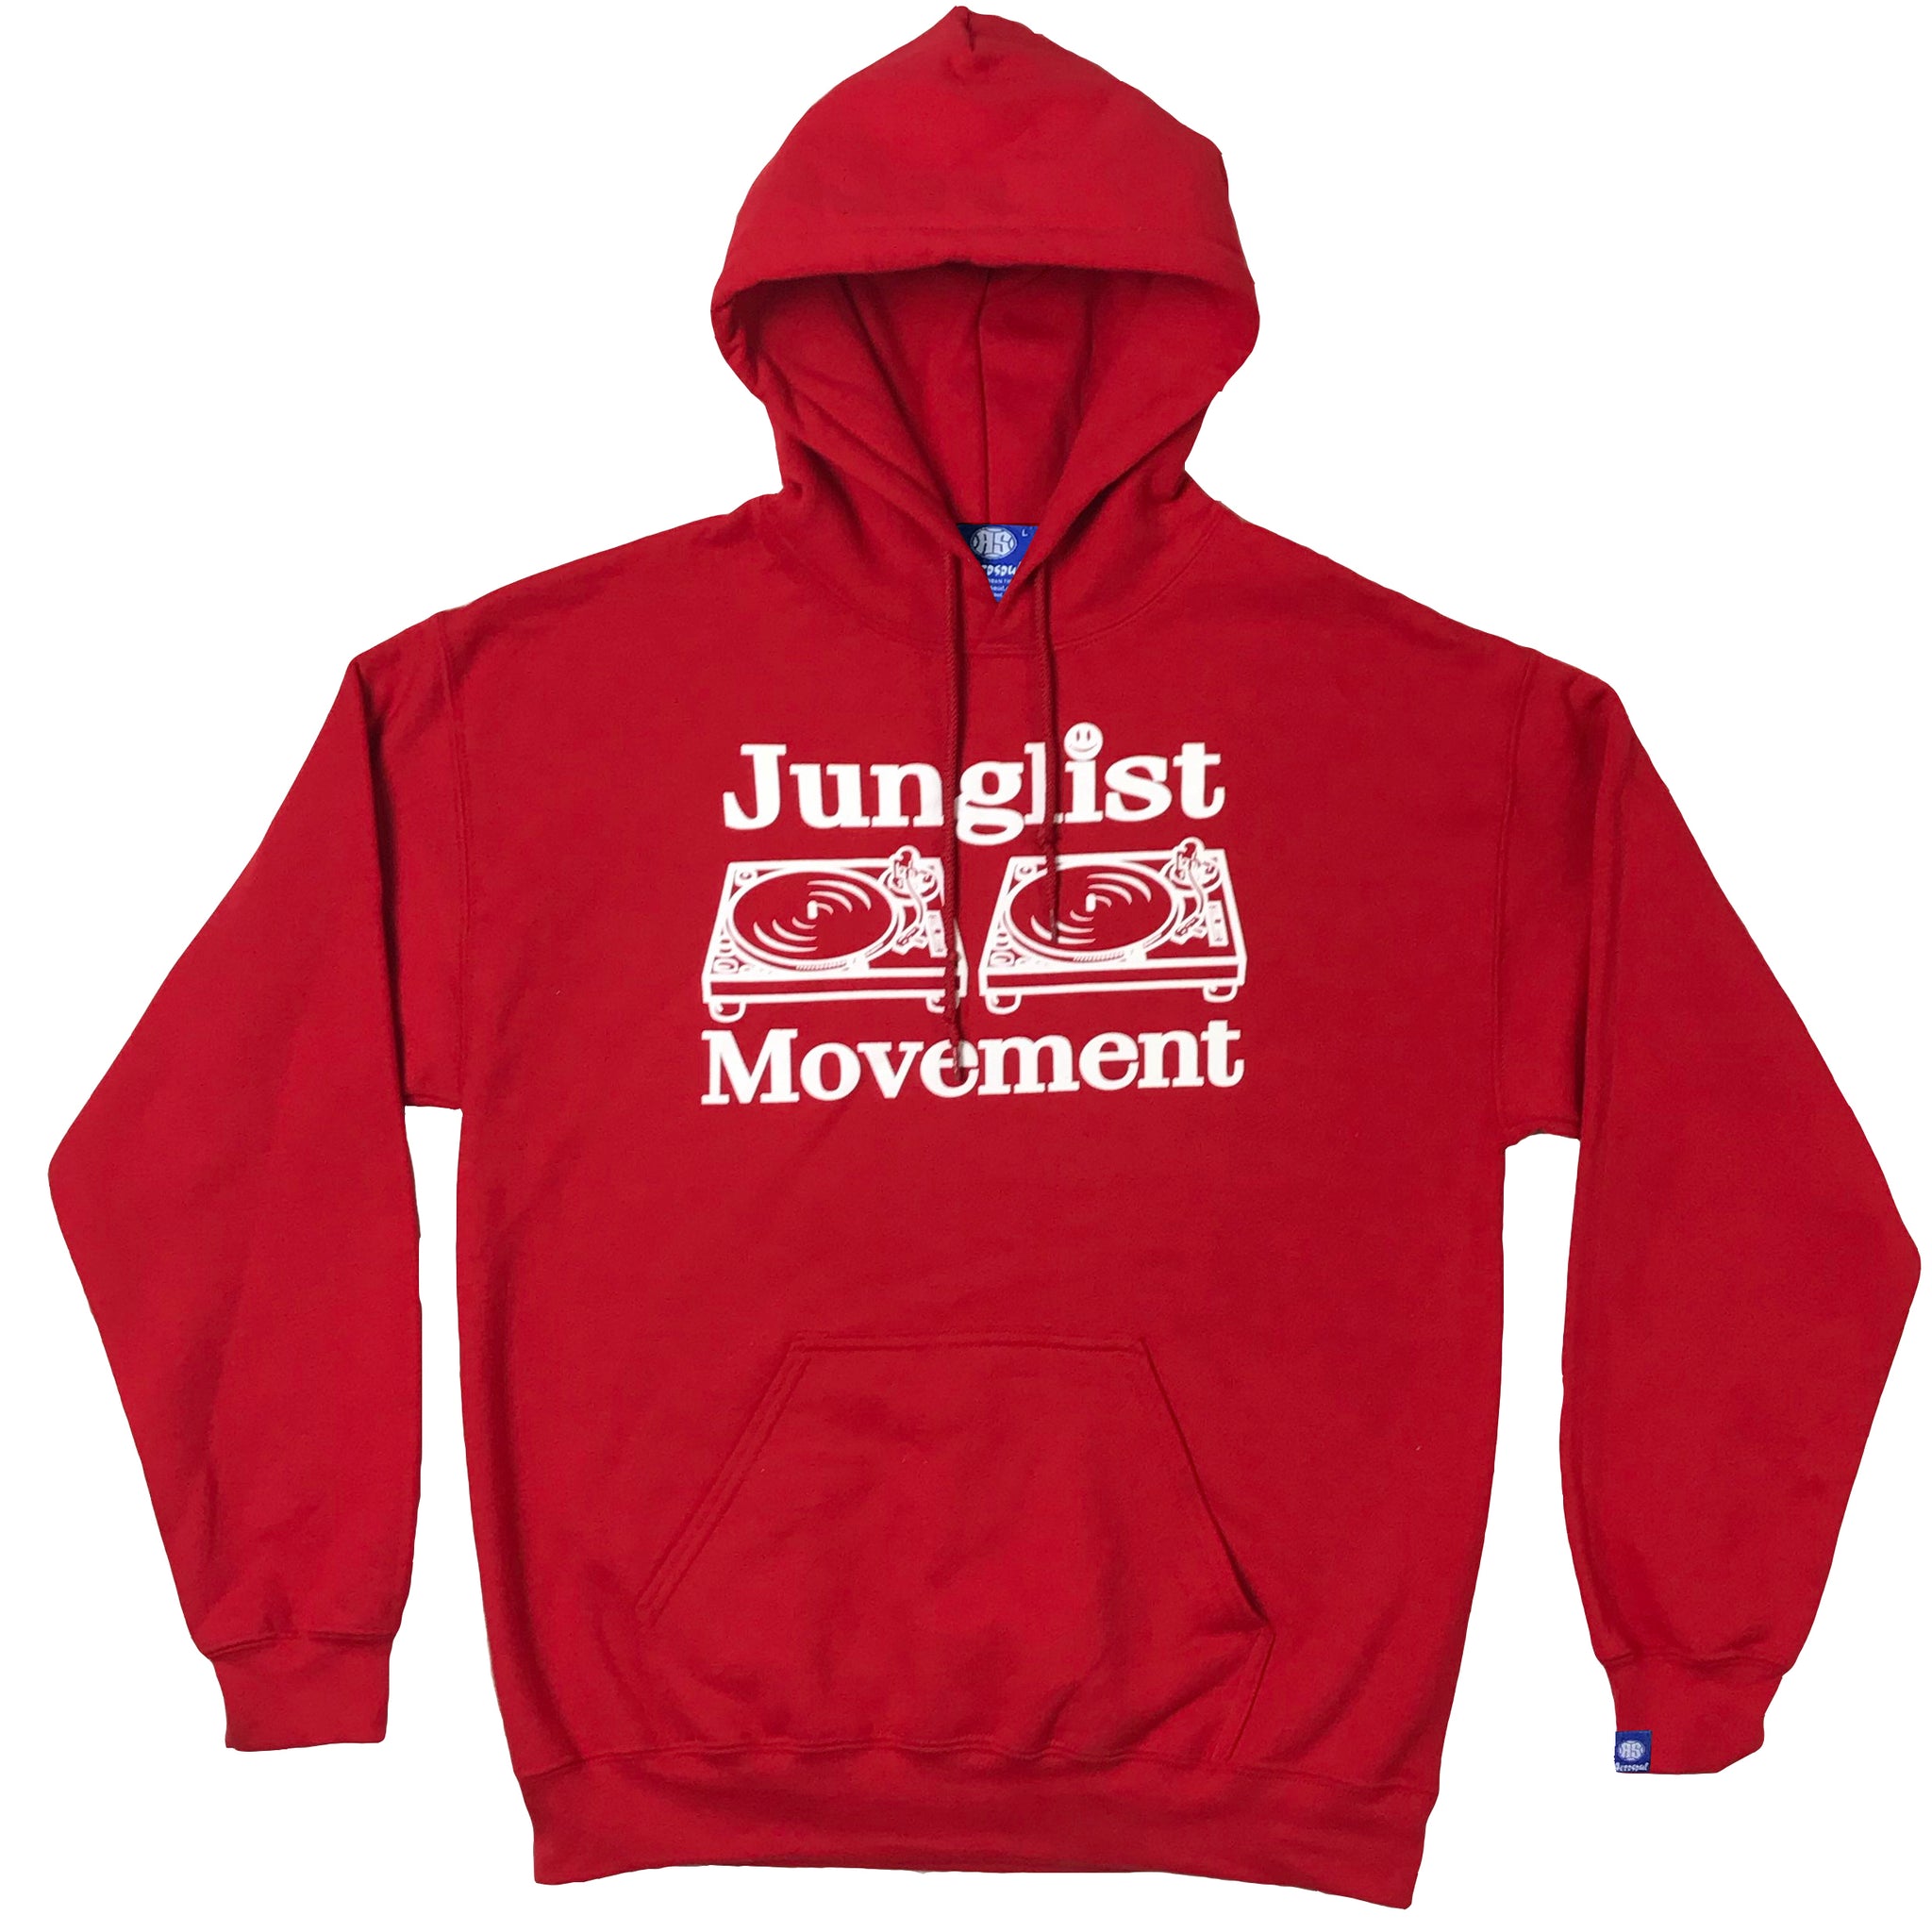 Junglist Movement Hoodie Red (White)